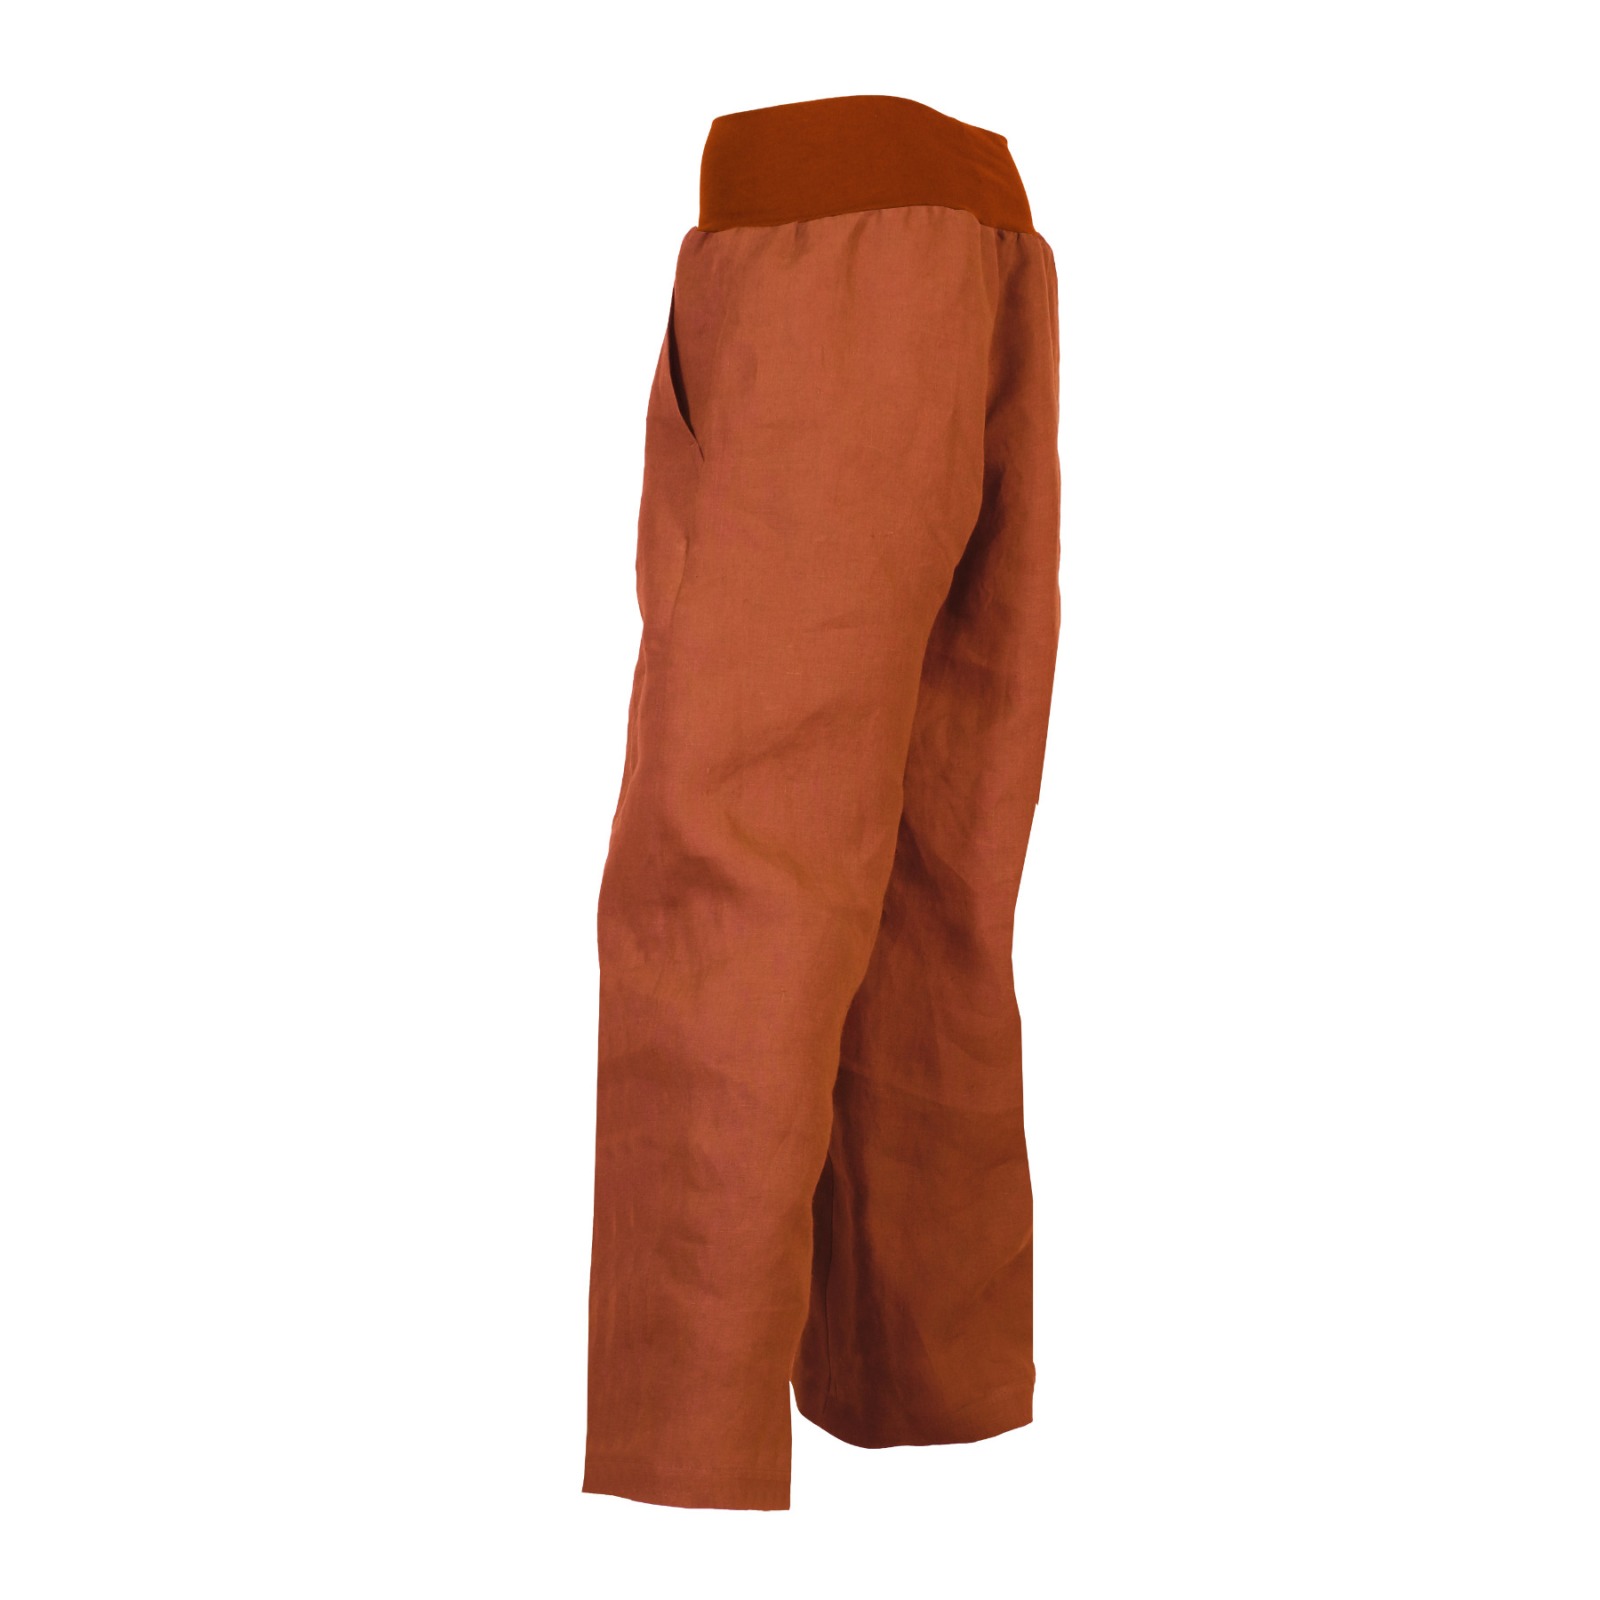 Bio hemp trousers Lola rust orange 2